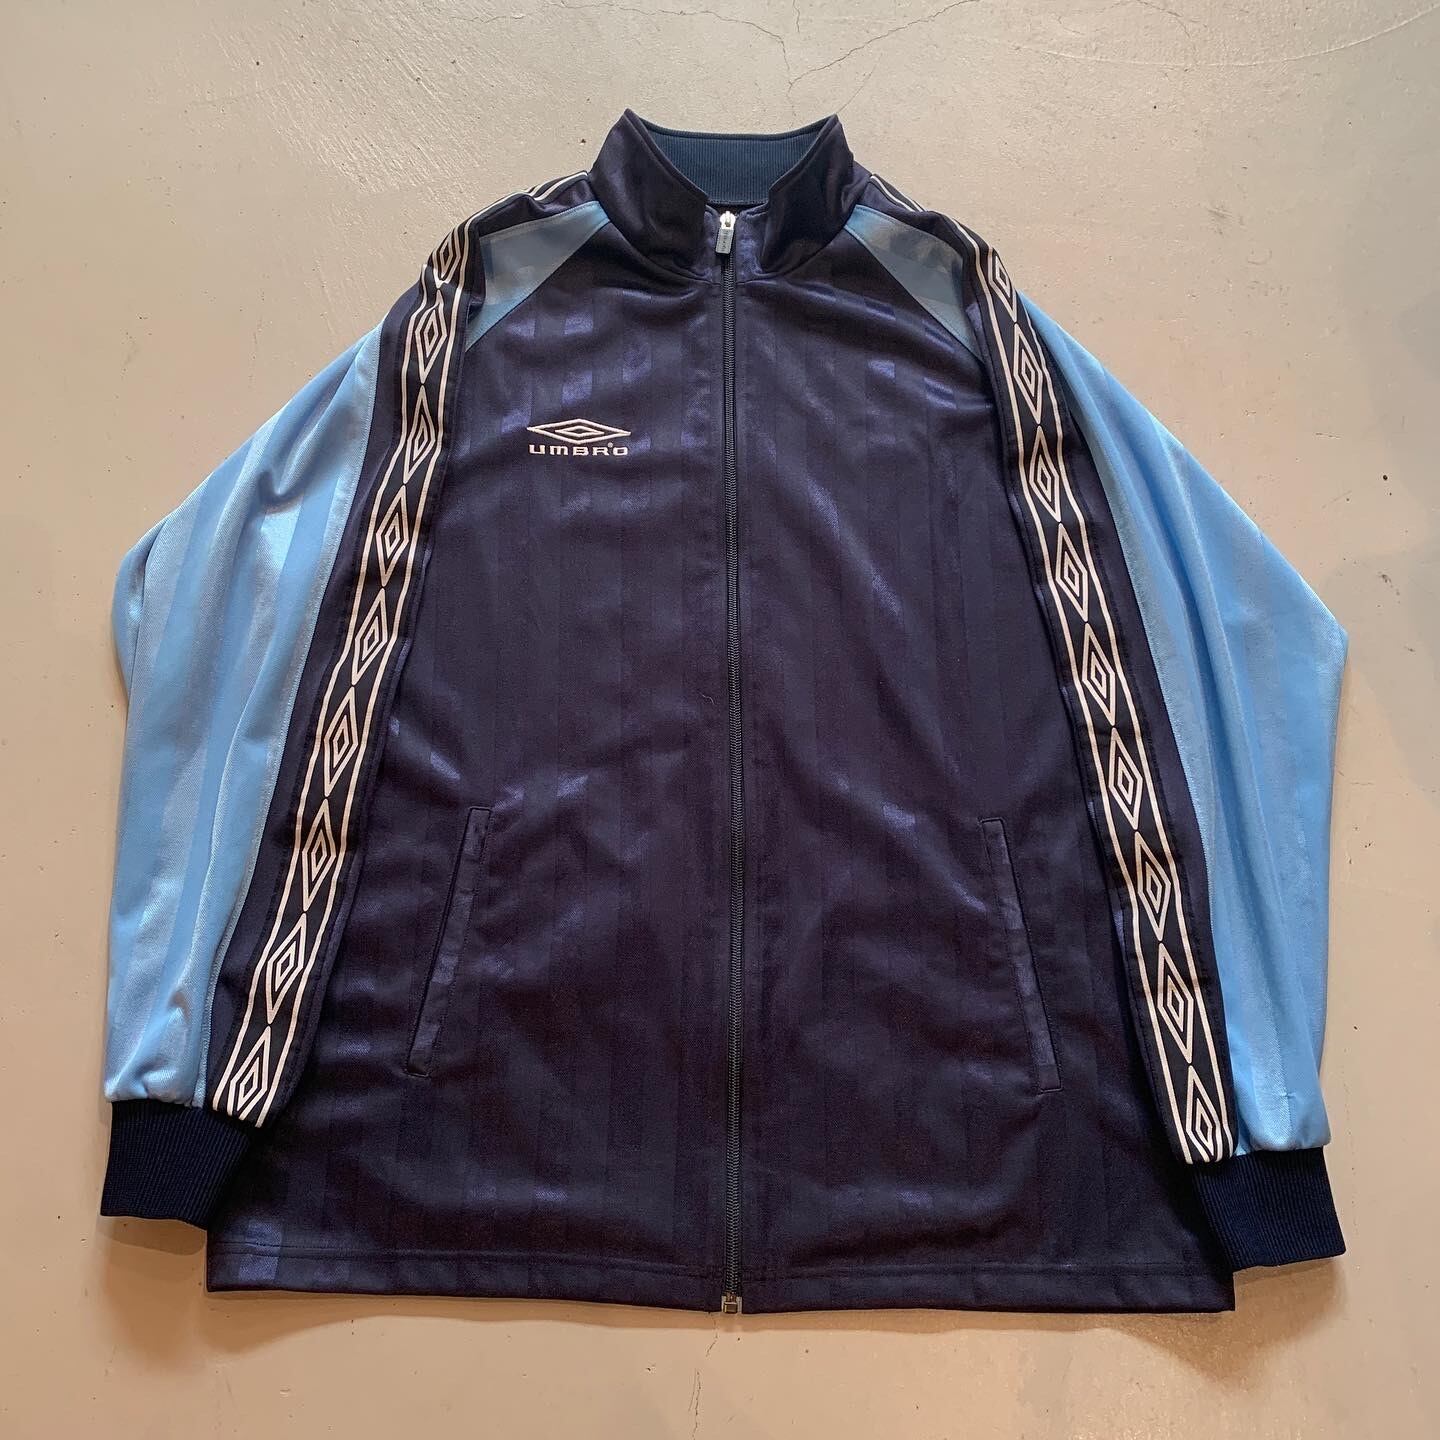 00's UMBR track jacket - ジャージ